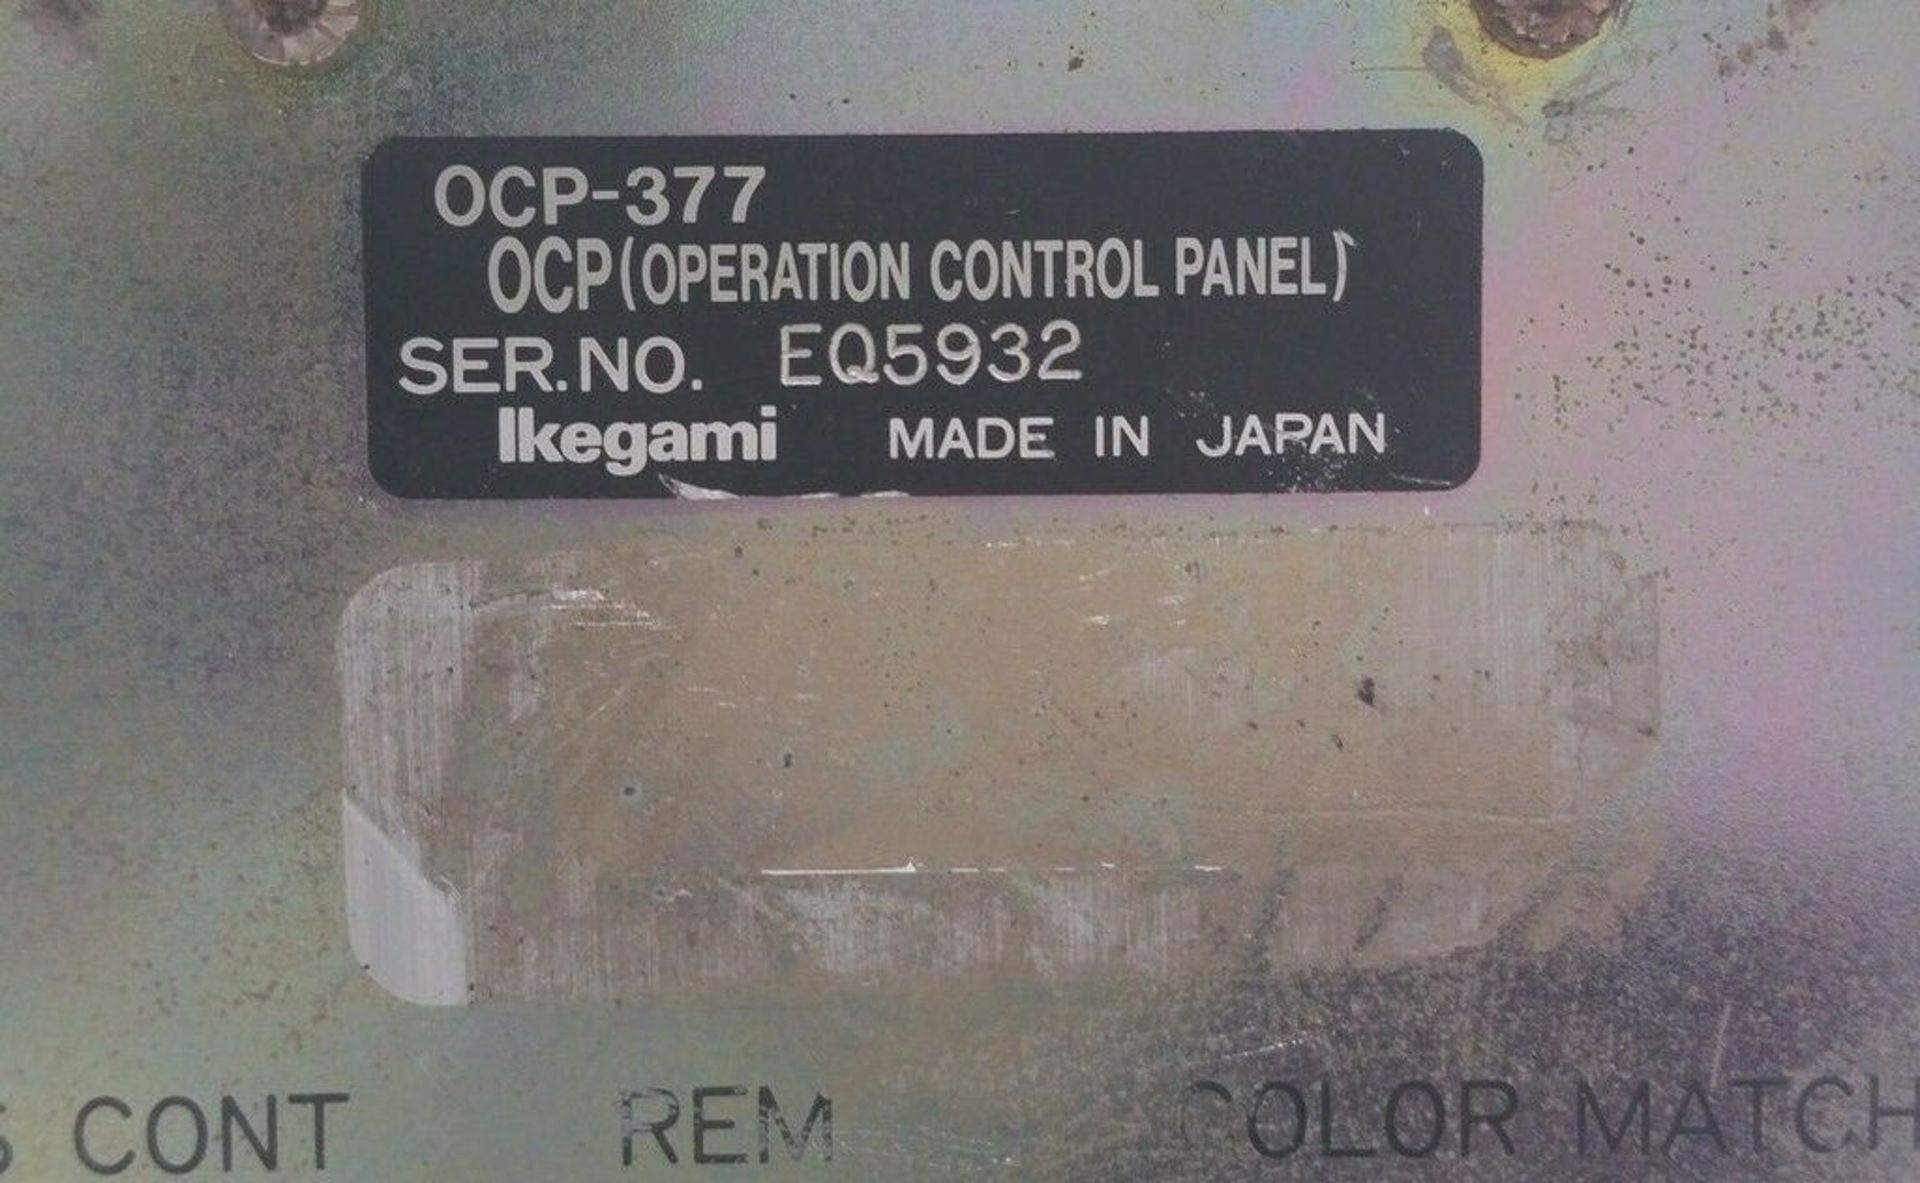 Ikegami Digital HDTV Camera Operation Control Panel - Image 3 of 3